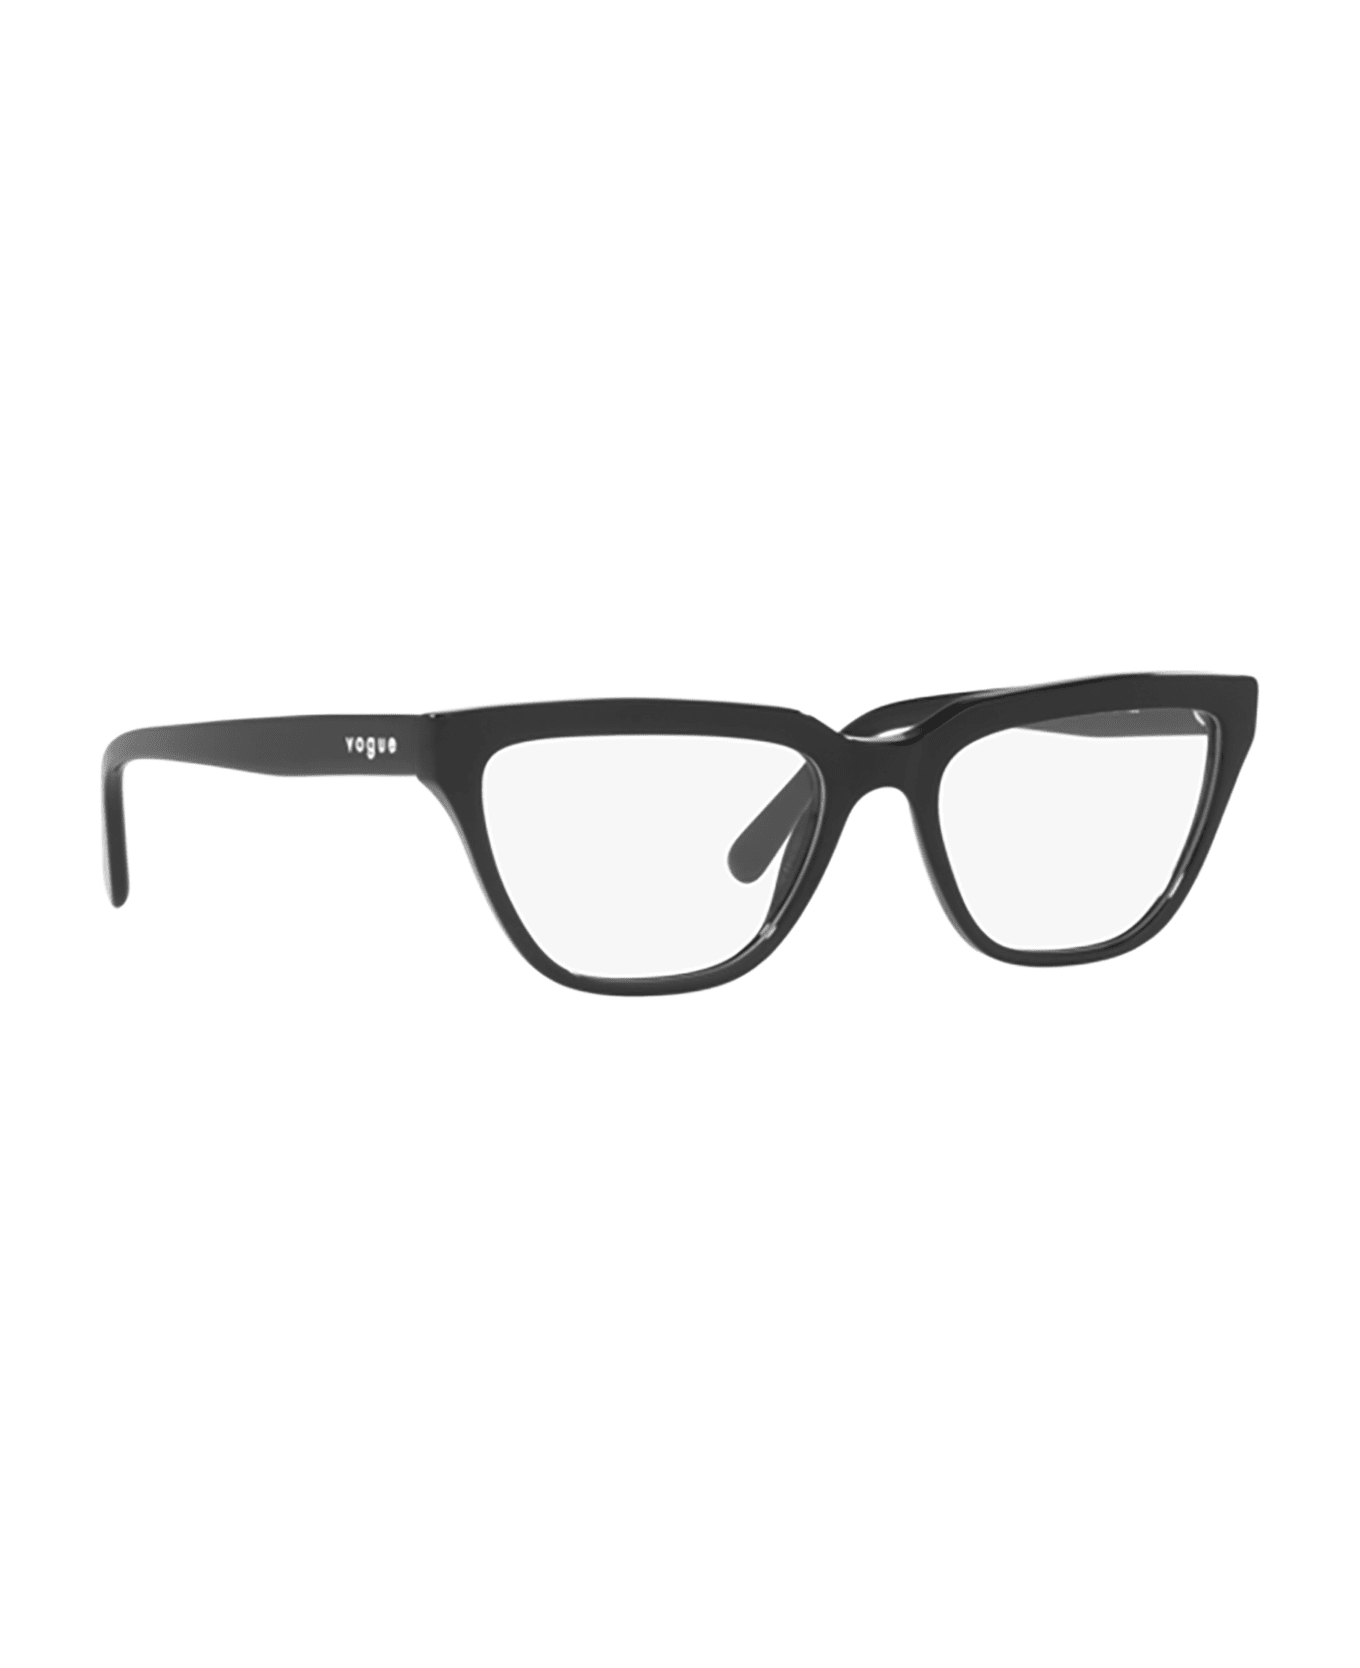 Vogue Eyewear Vo5443 Black Glasses - Black